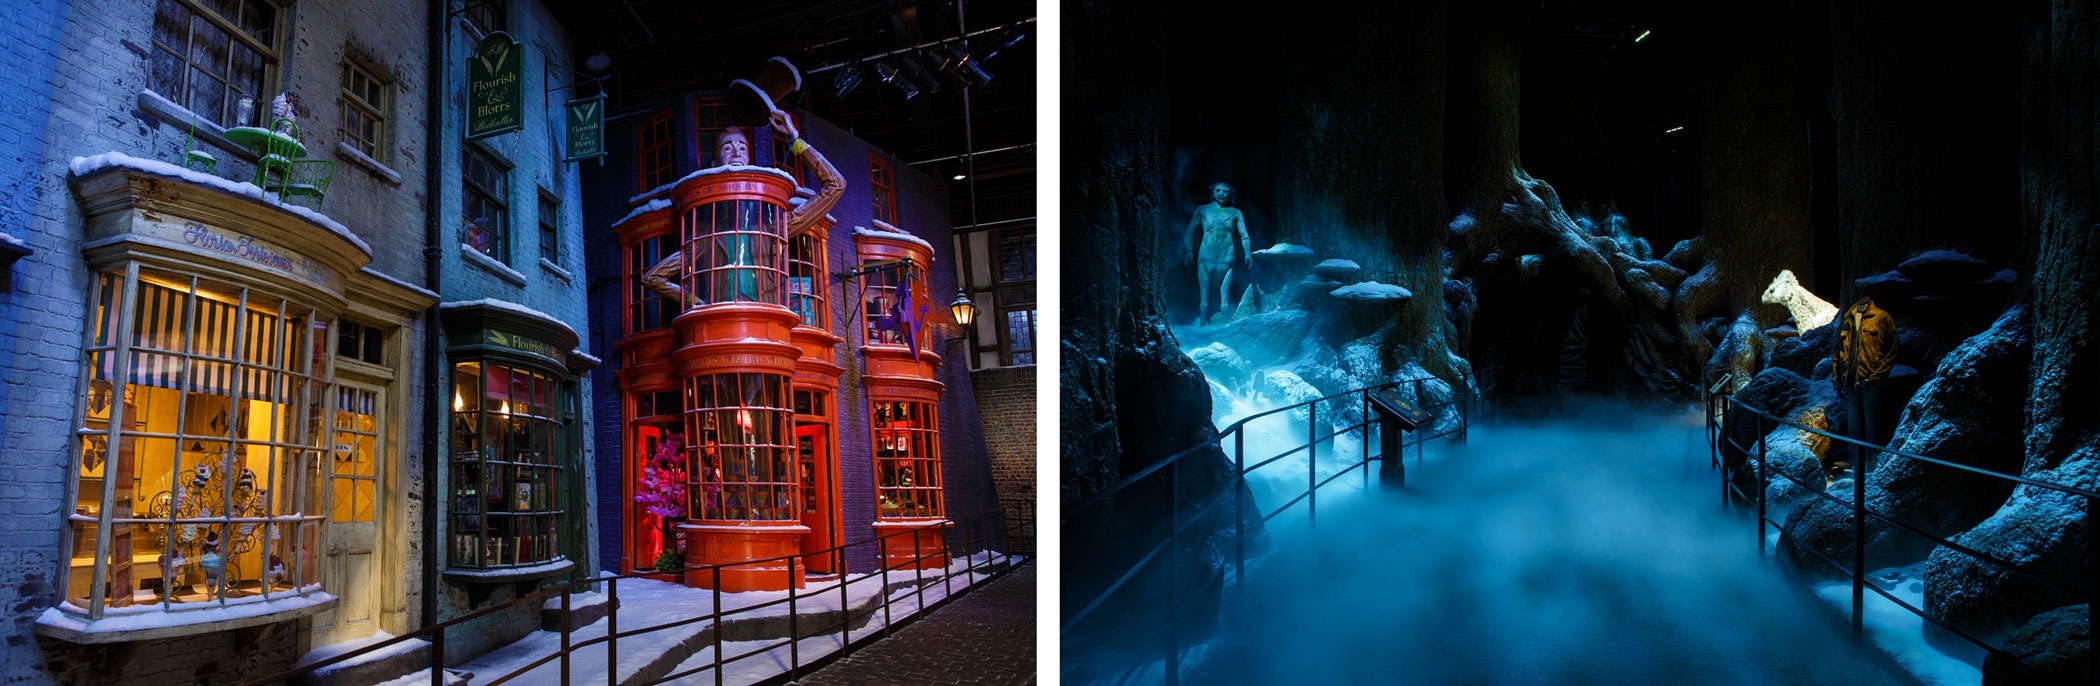 Hogwarts in the Snow - Warner Bros. Studio Tour London